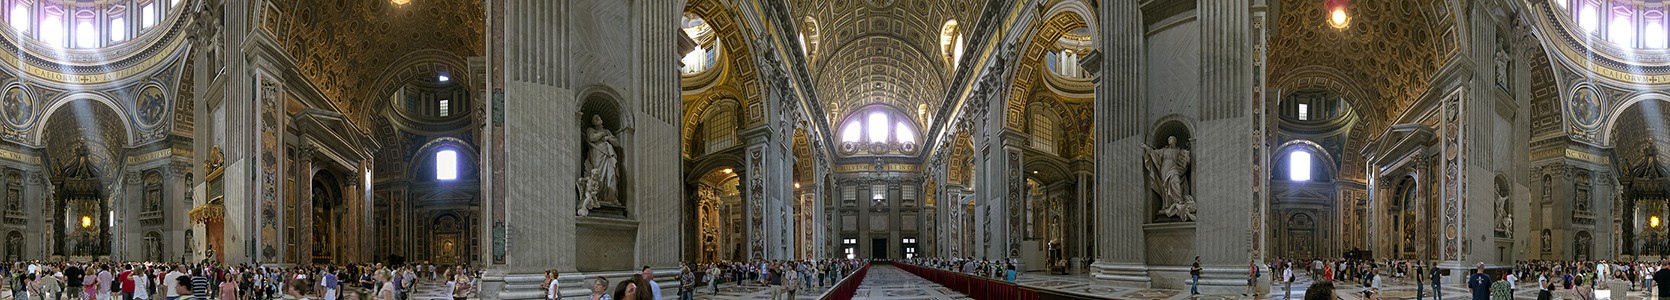 Vatikan Petersdom